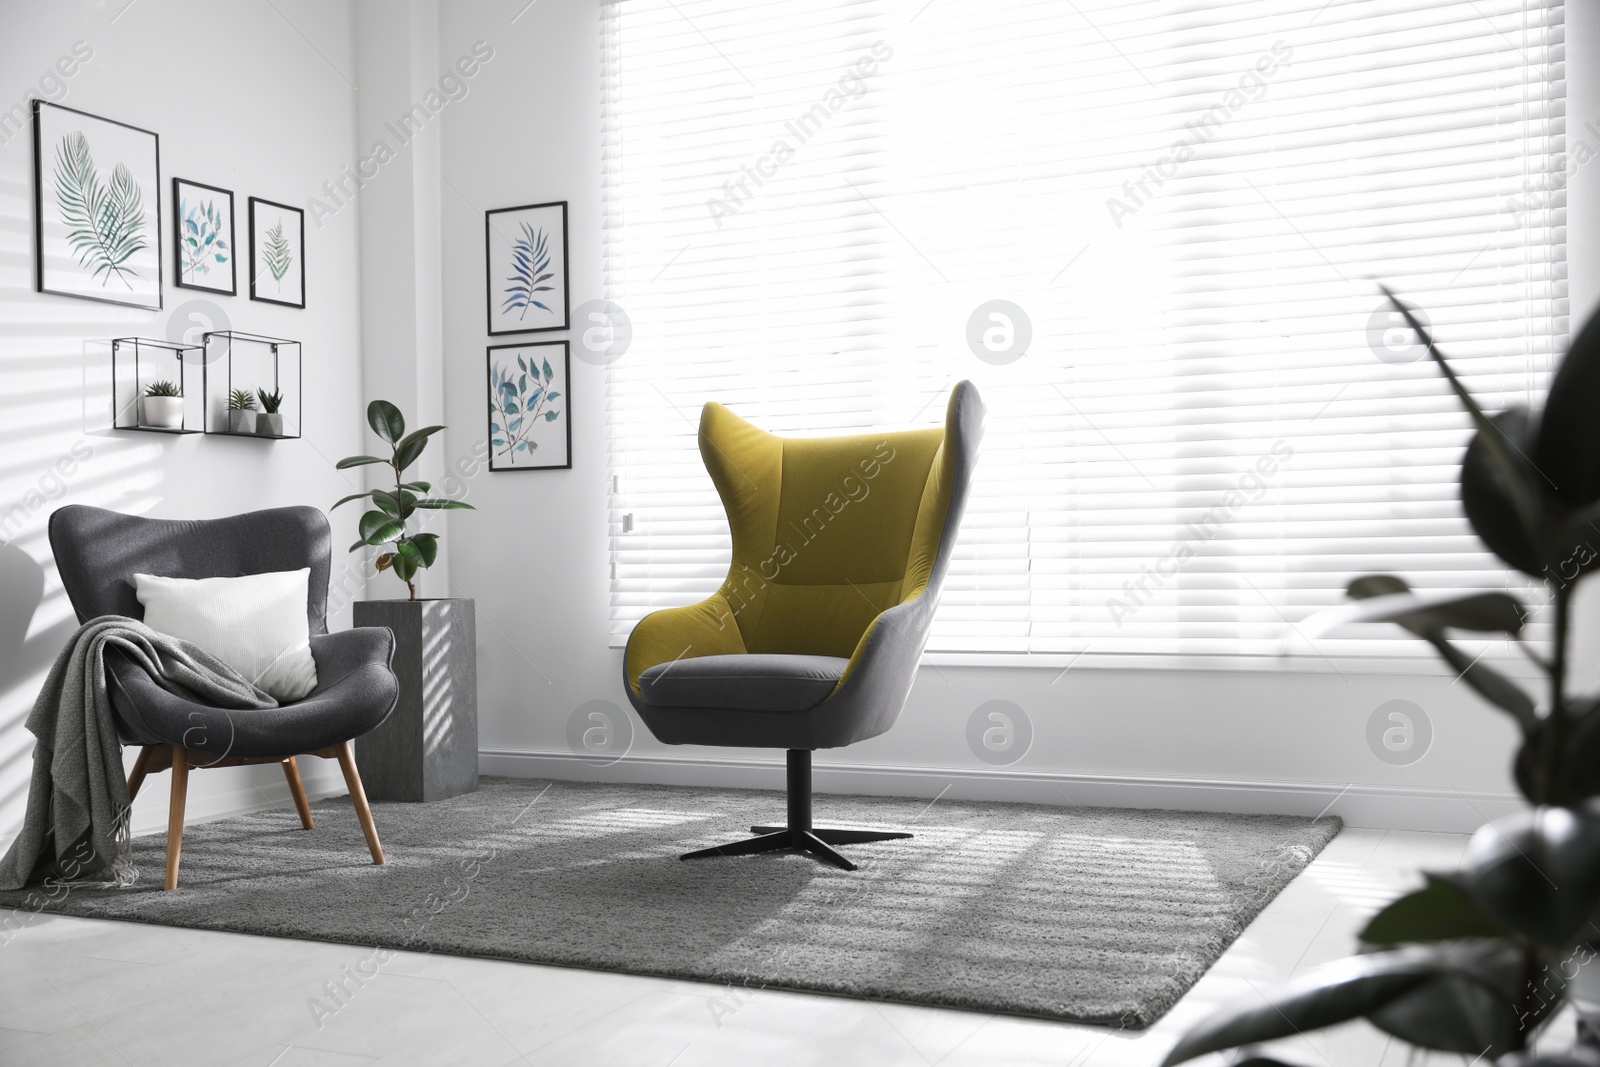 Photo of Comfortable armchairs near window in light room